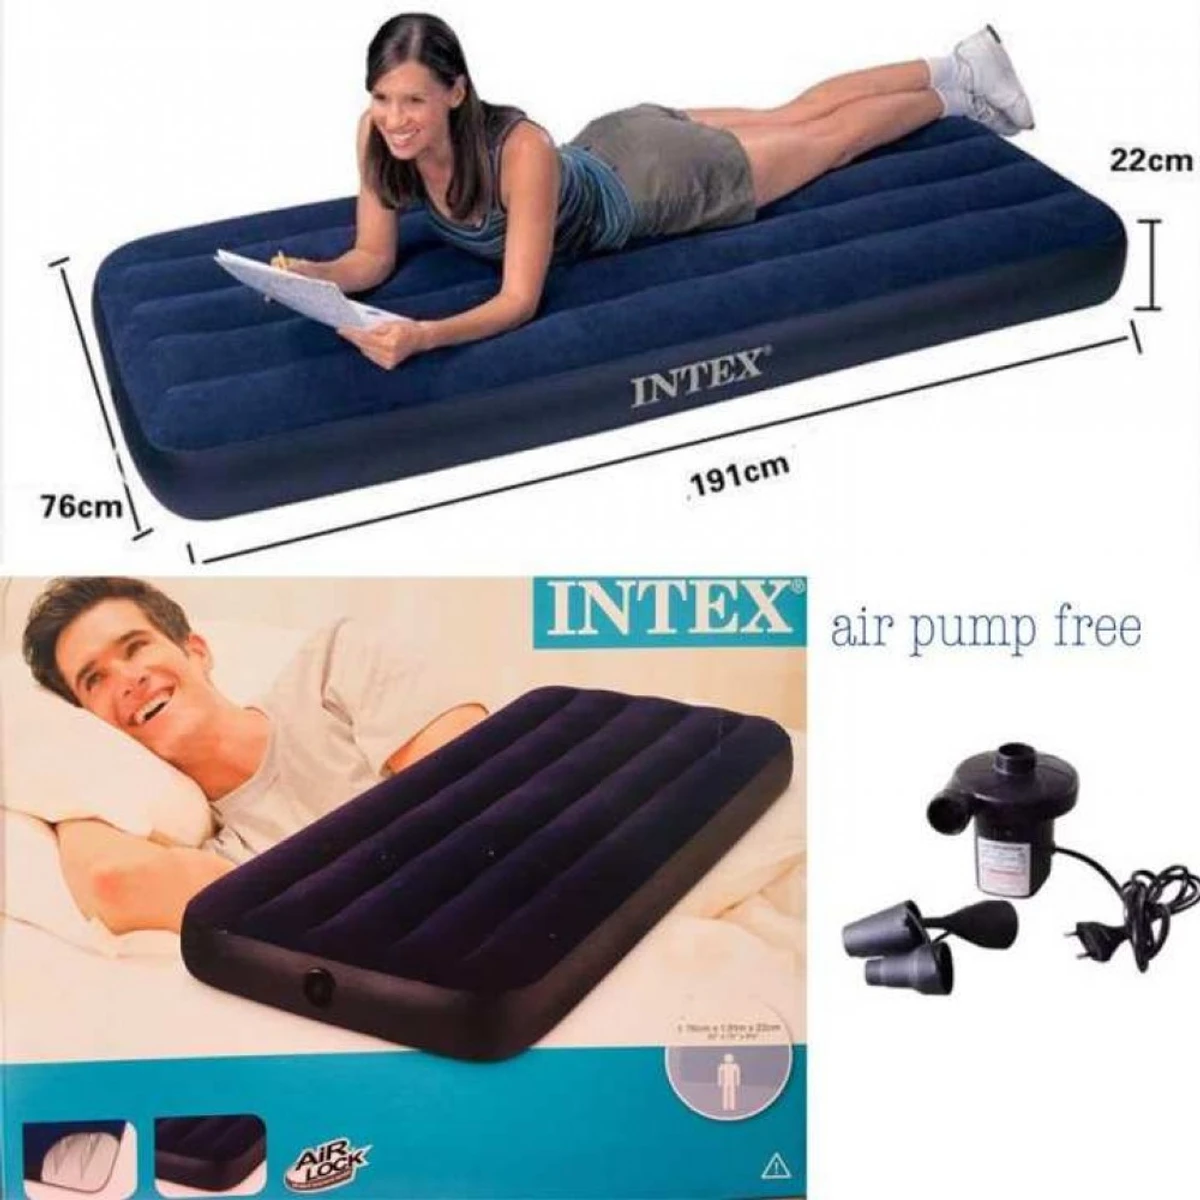 Portable INTEX Air bed & Air Mattress with Free Electric Pumper